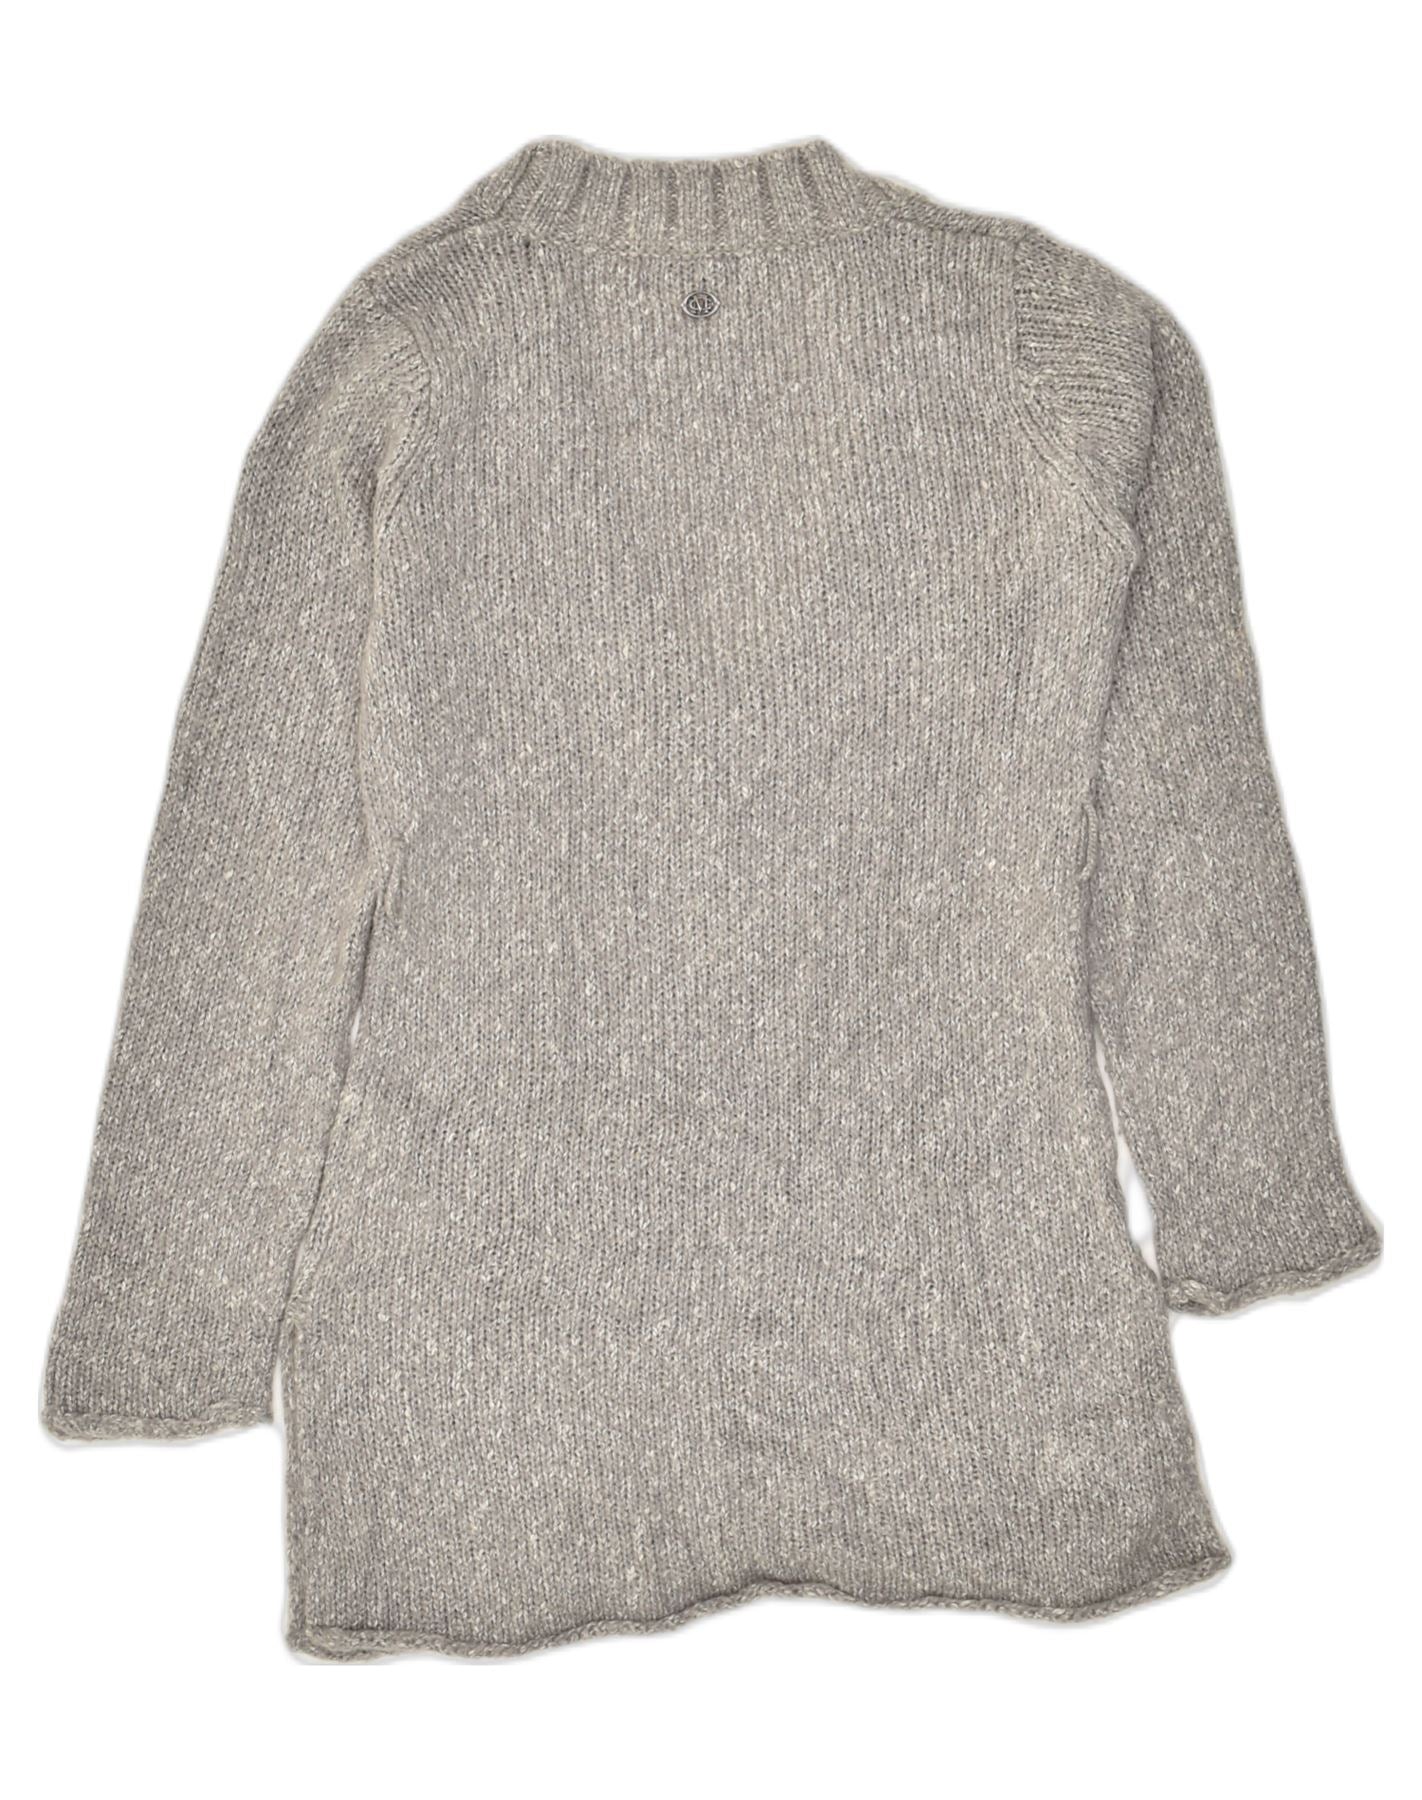 HOLLISTER Womens Cardigan Sweater UK 8 Small Navy Blue Cotton